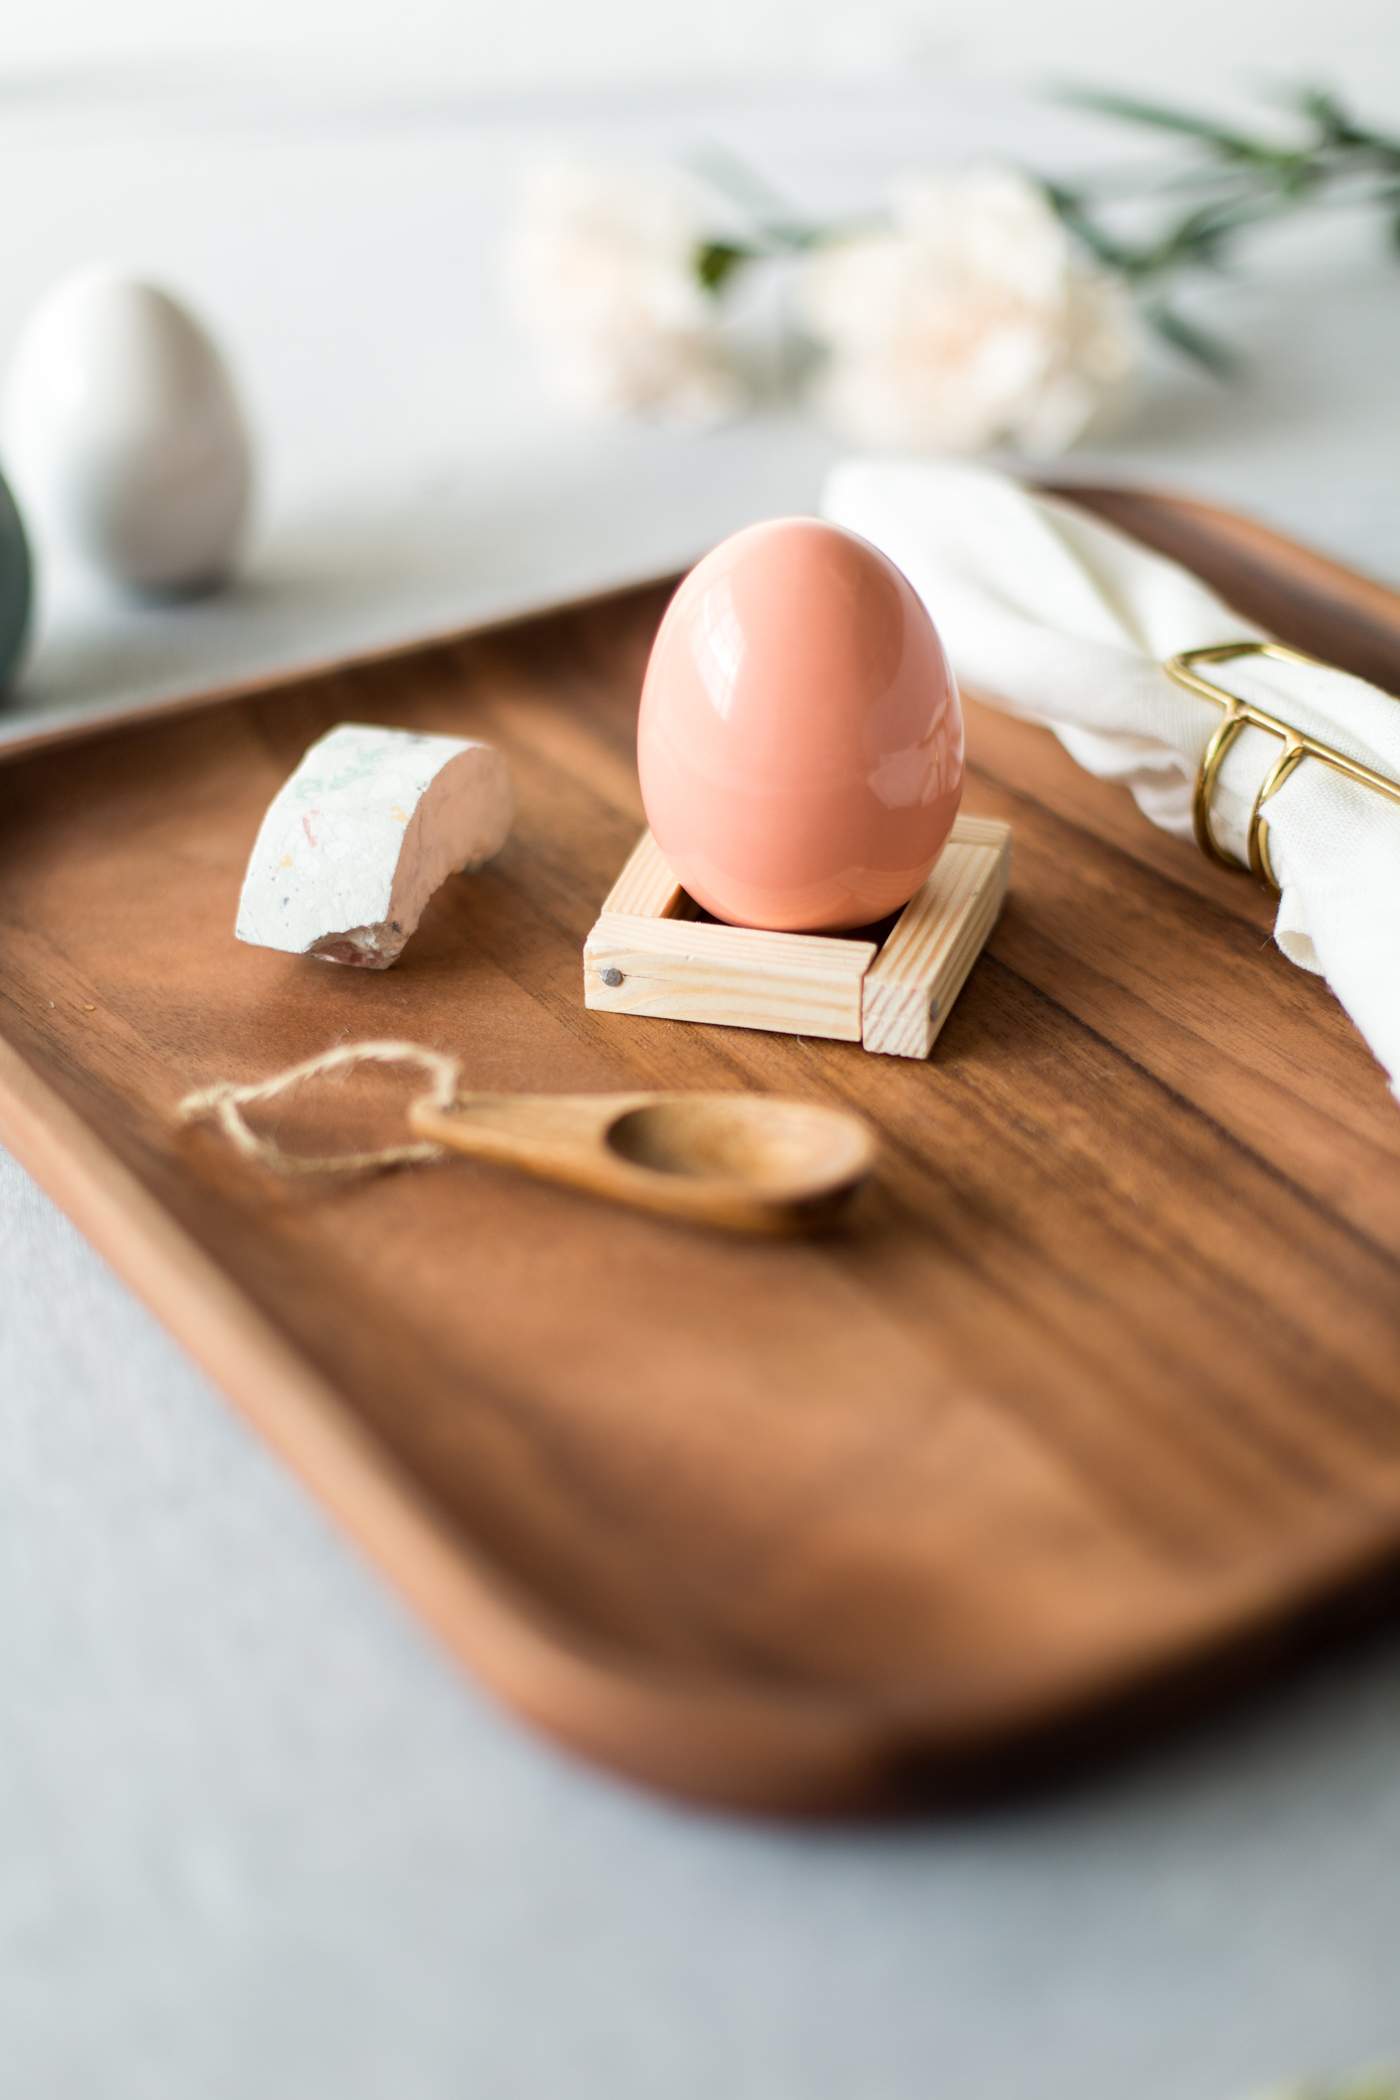 jojofuny 12pcs Wooden Easter Egg Holder,Wooden Storage Egg Cups Egg Holding Cups Tray DIY Painting Easter Craft